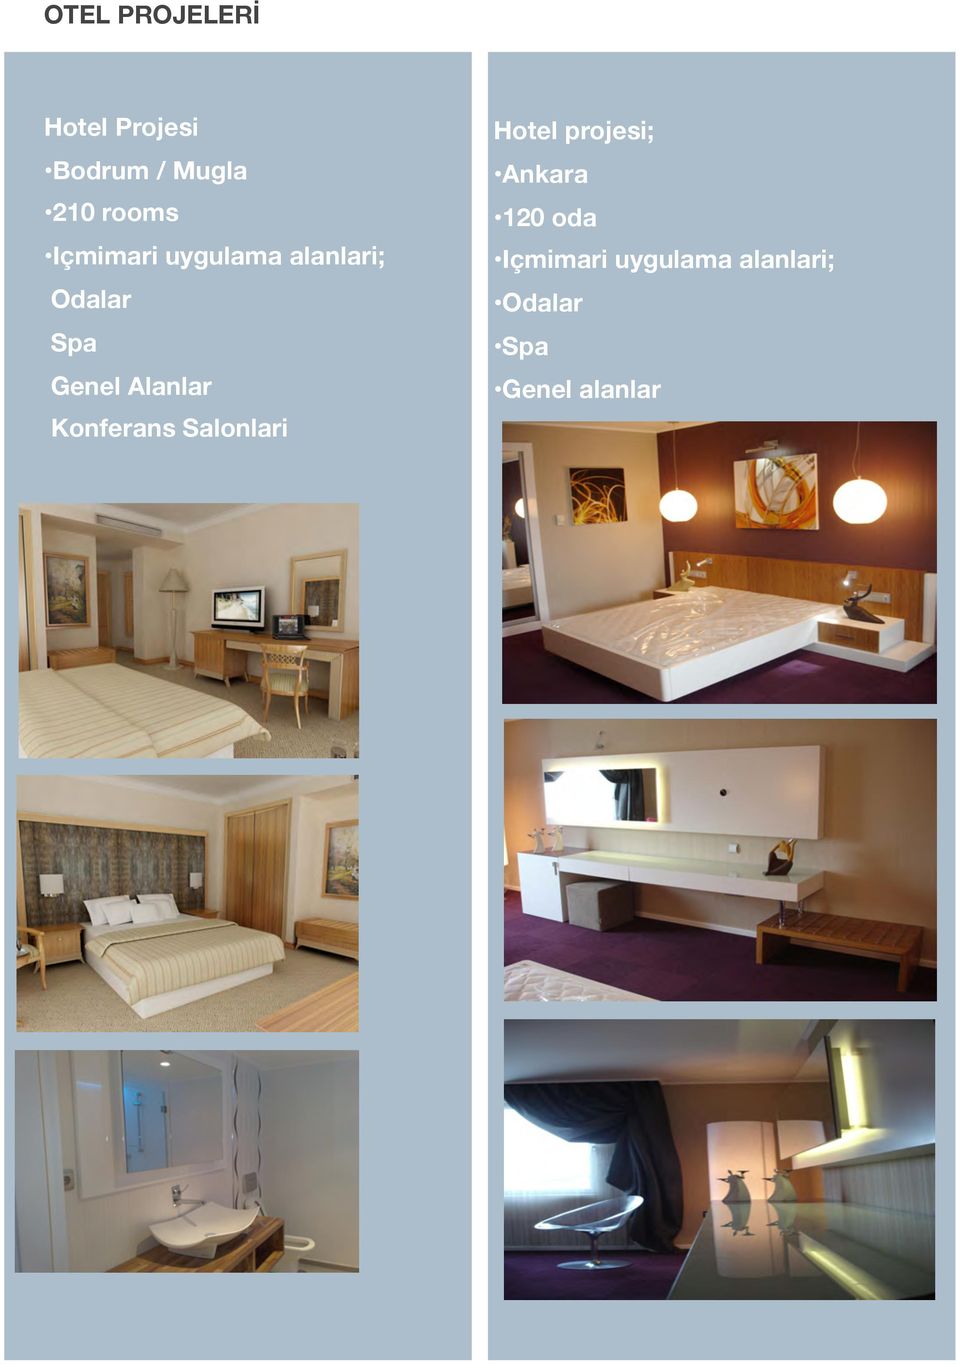 Alanlar Konferans Salonlari Hotel projesi; Ankara